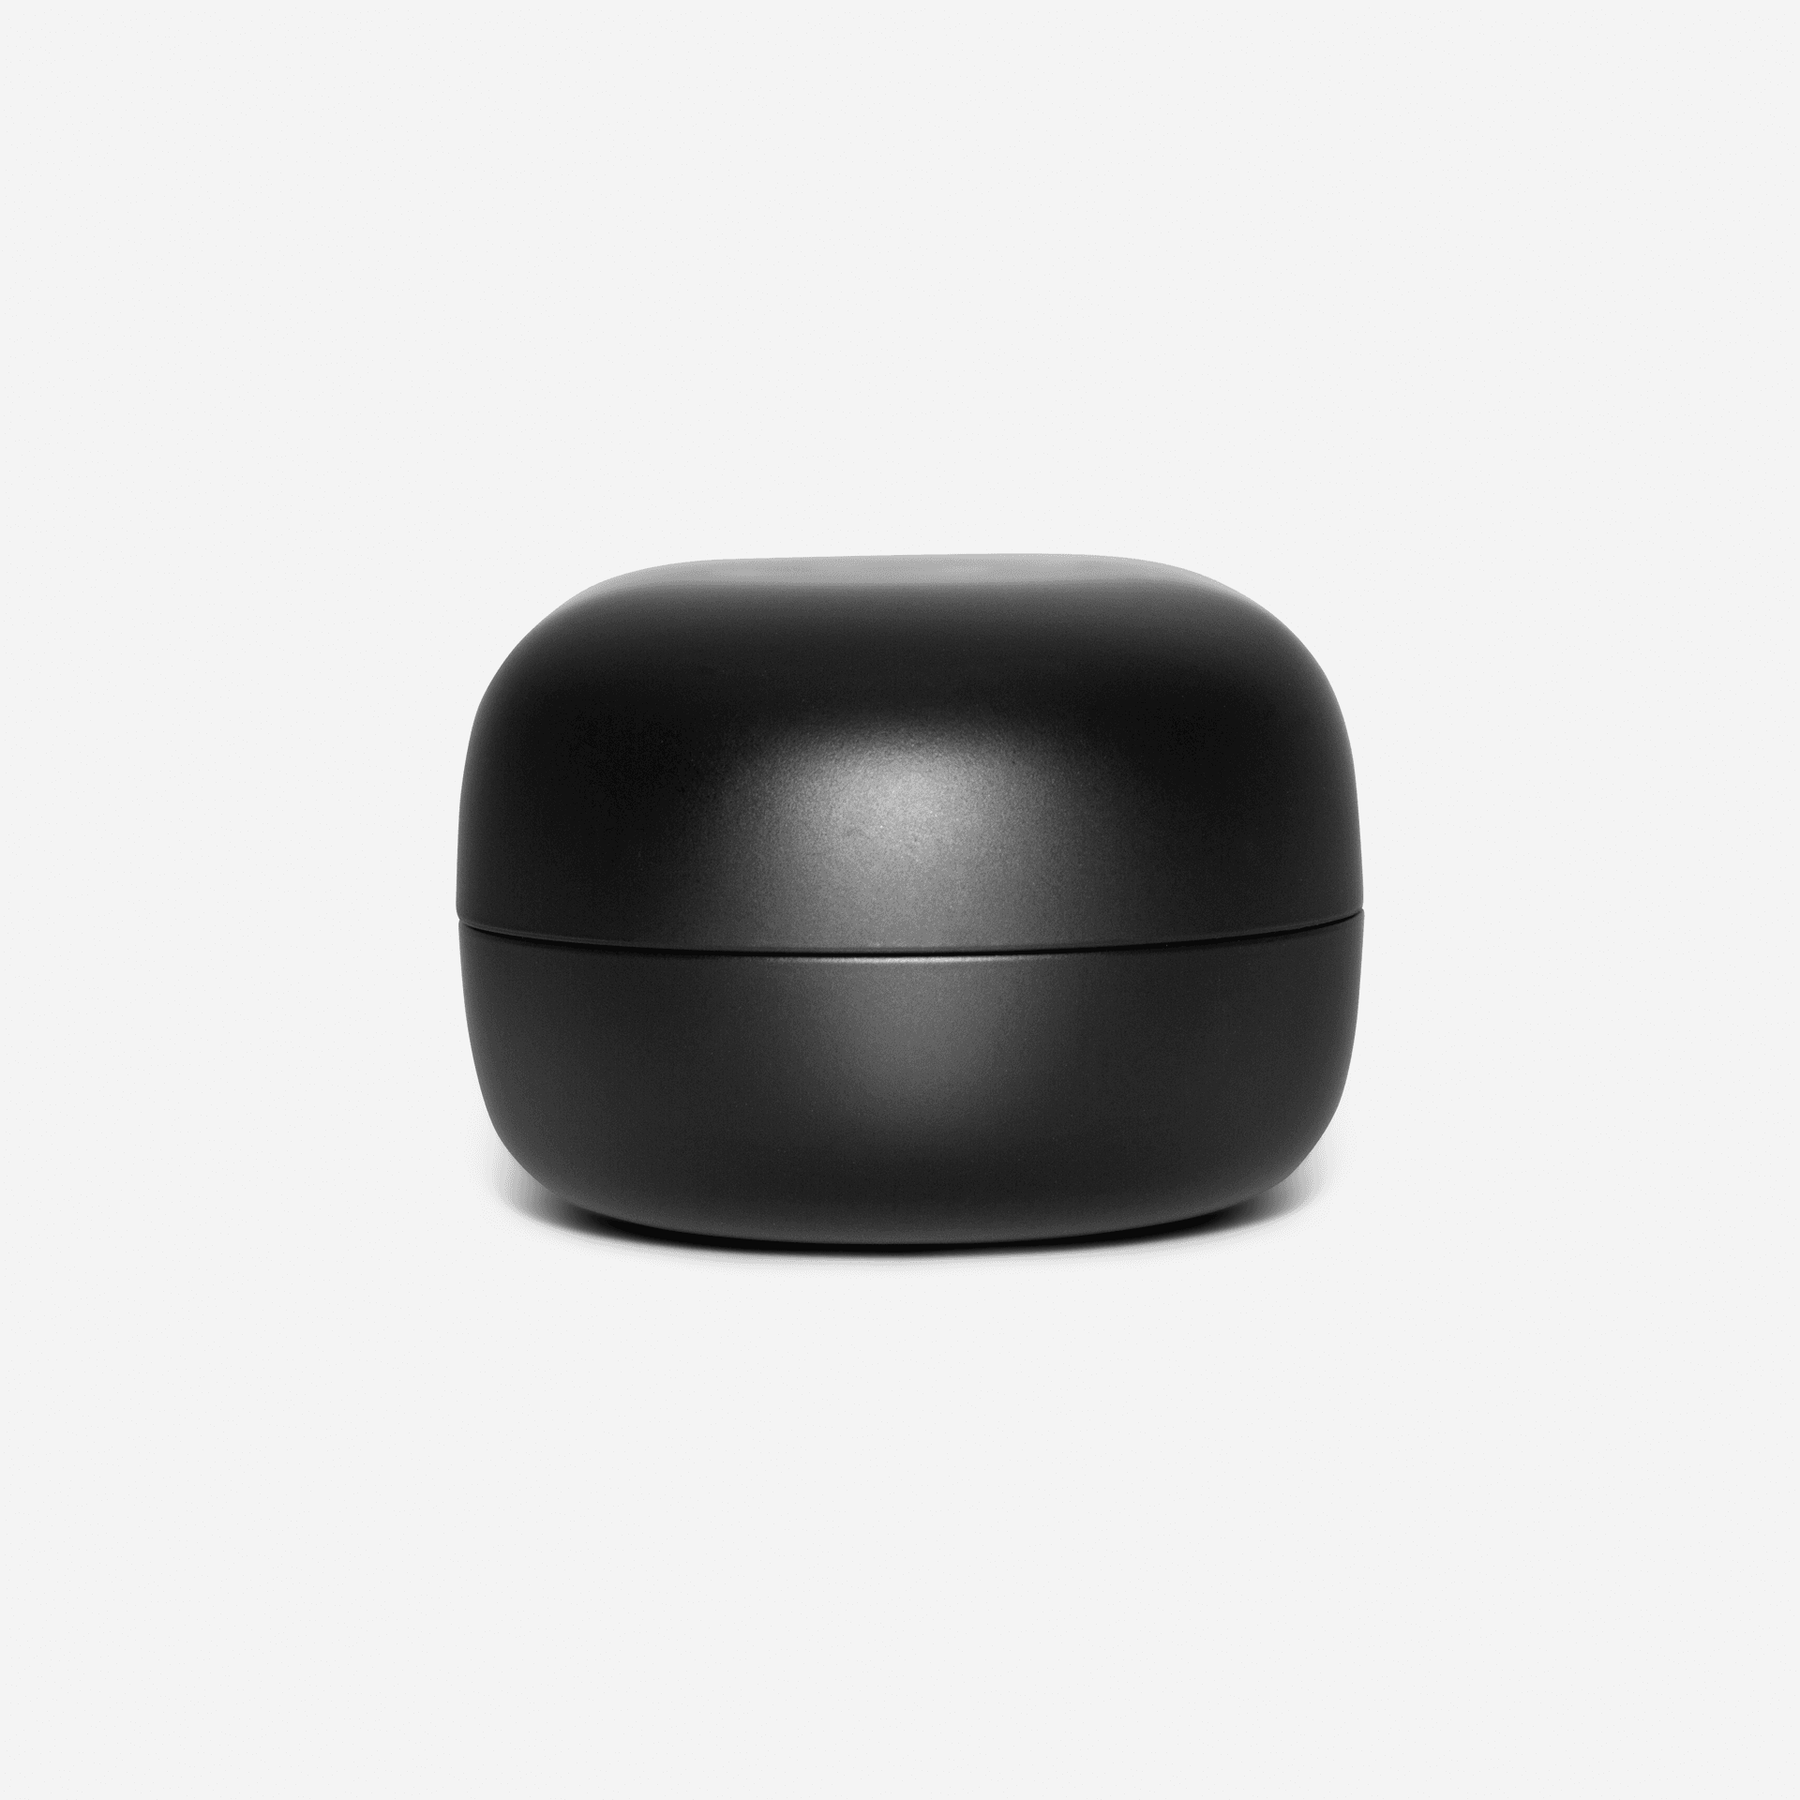 mymanu: CLIK S Translation Wireless Earbuds | Wake Concept Store